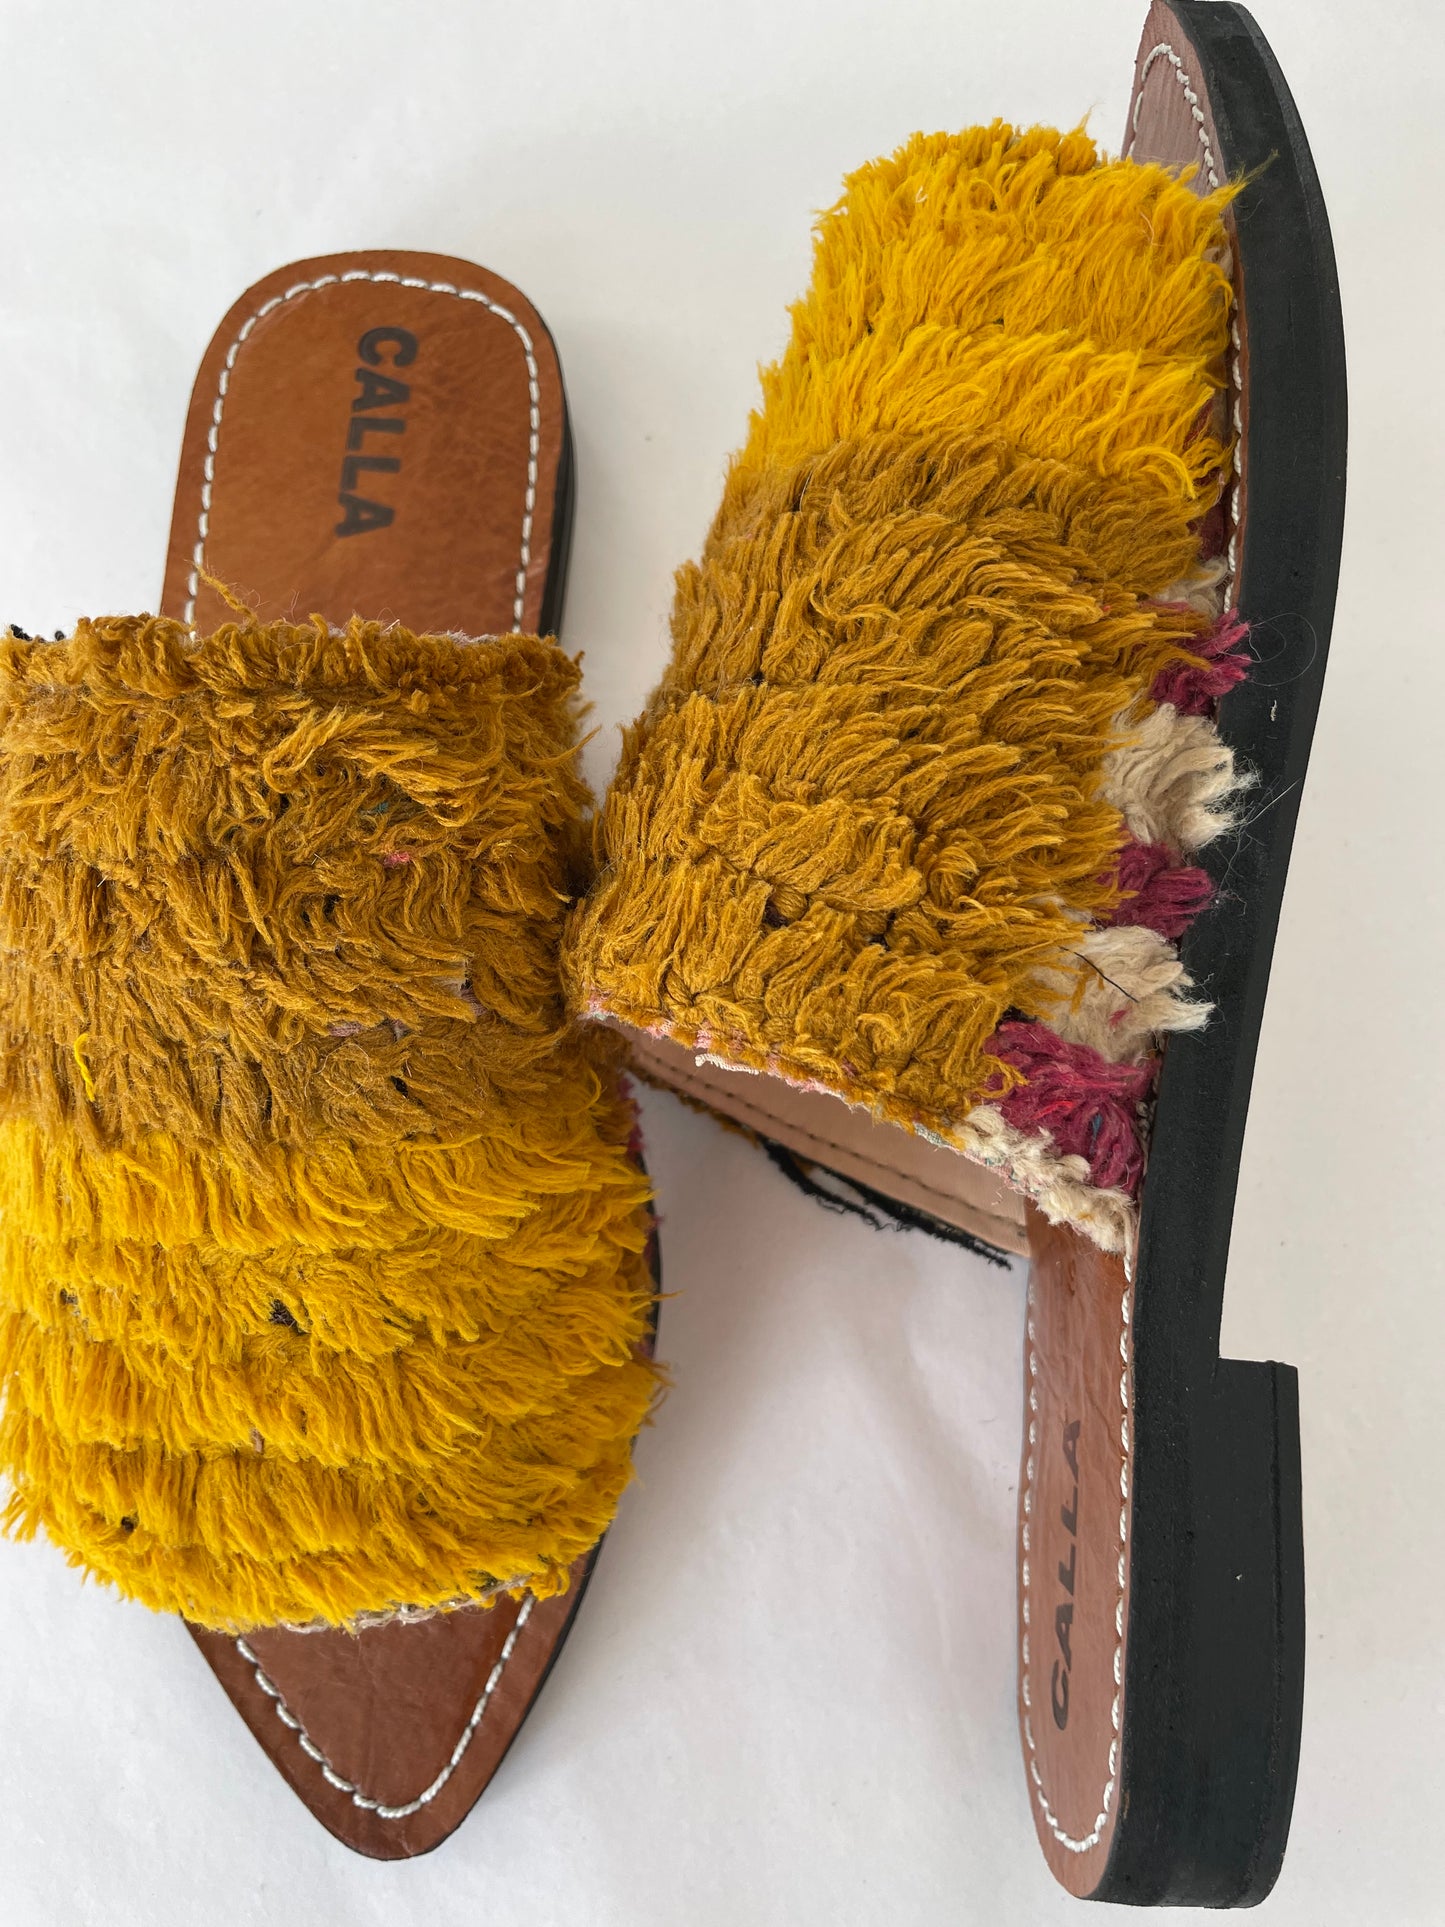 Sandal, Moki Babouche slippers, size 39 from Morocco